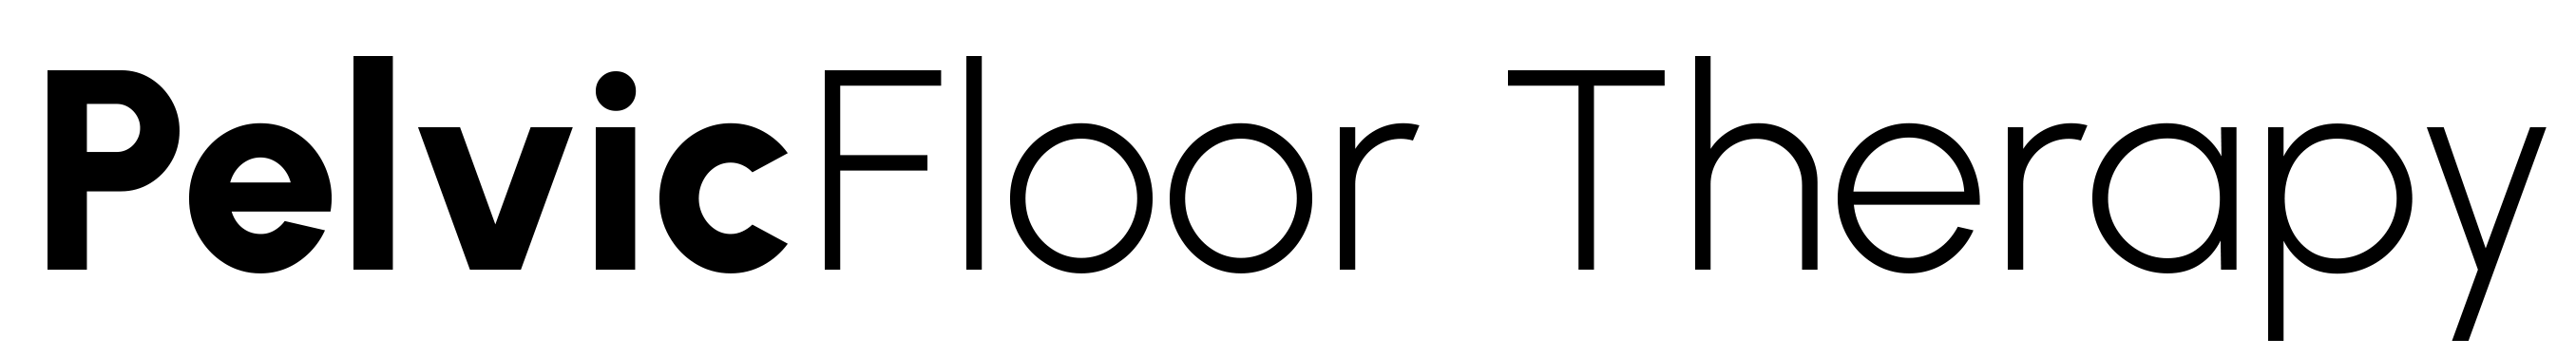 pelvic floor therapy logo